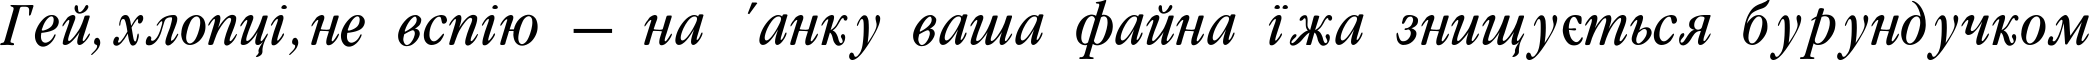 Пример написания шрифтом Garamondcond-Light-Italic текста на украинском